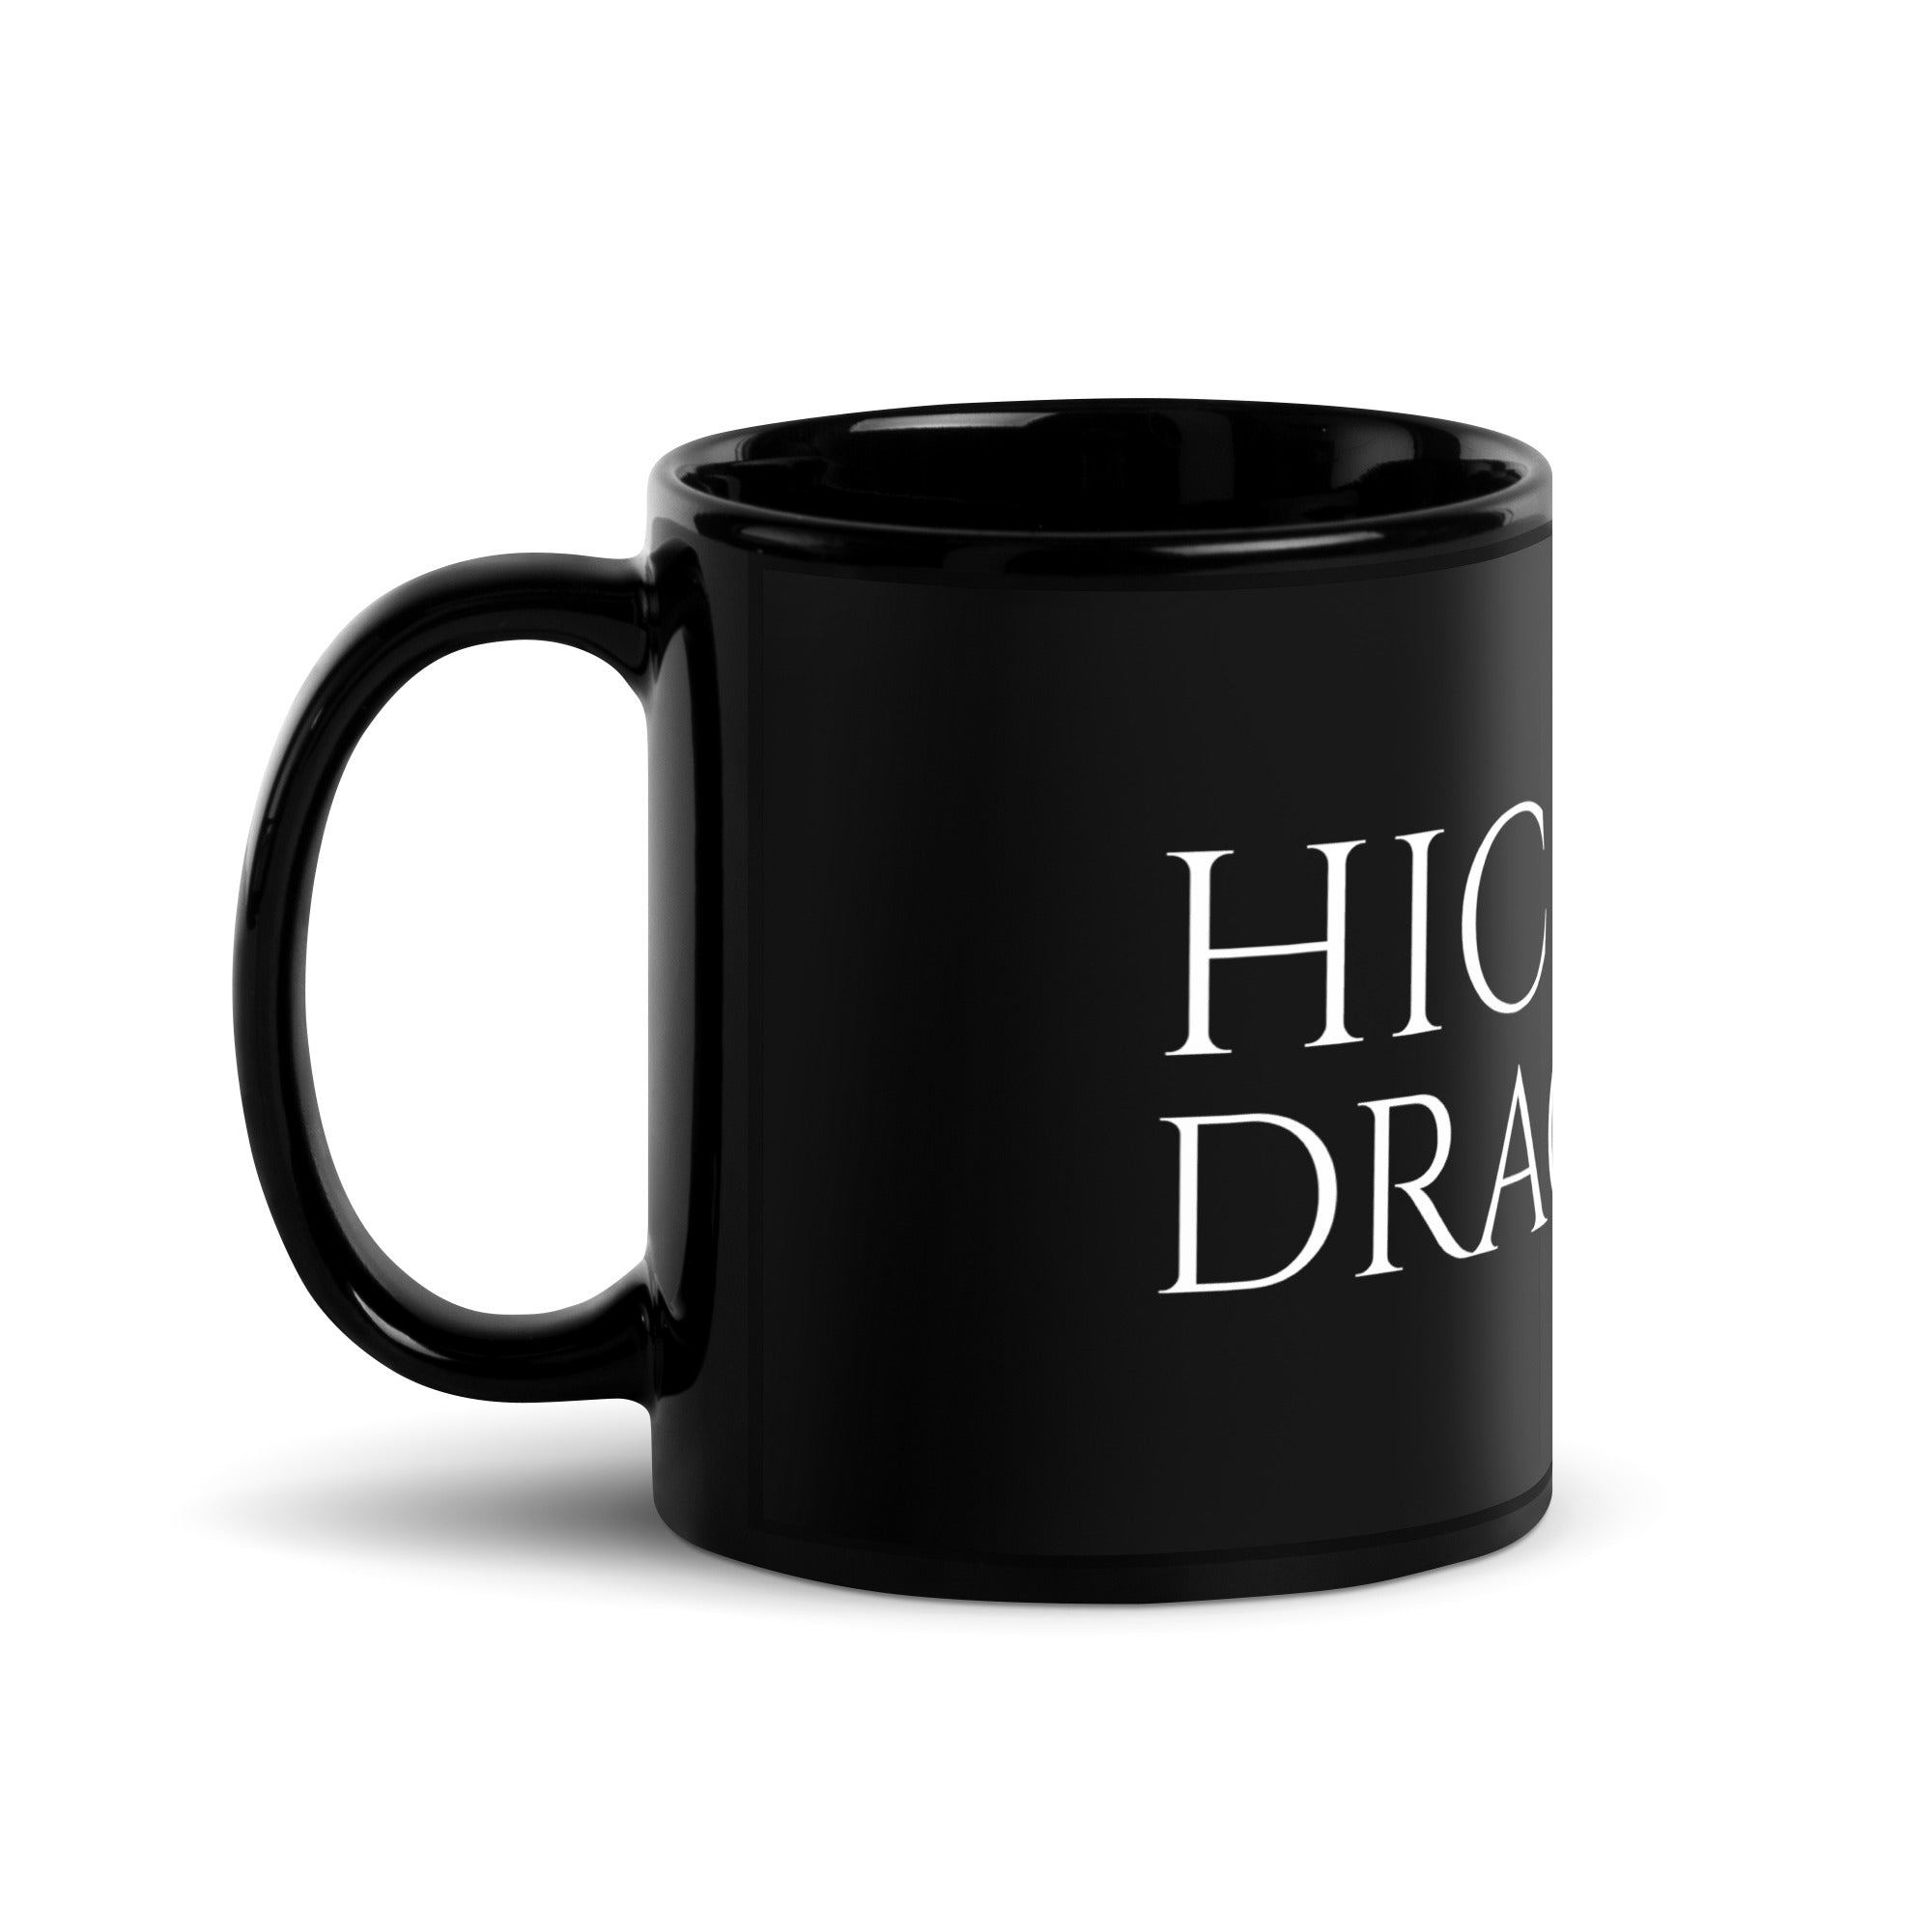 Hic Sunt Dracones - Here Be Dragons - Latin Language Black Glossy Mug